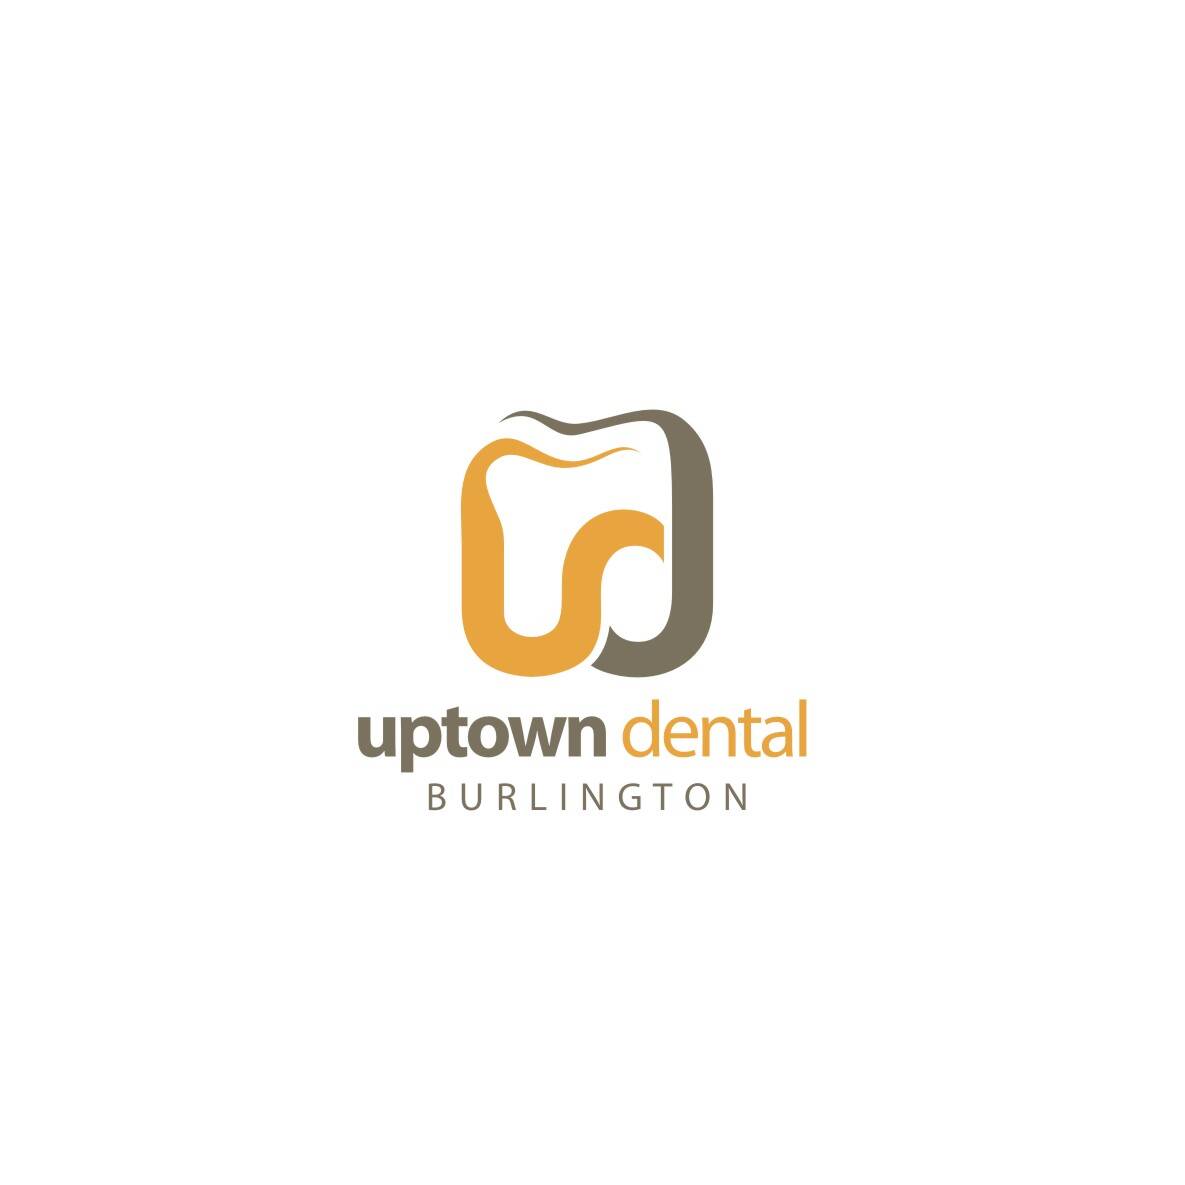 uptown dental Burlington